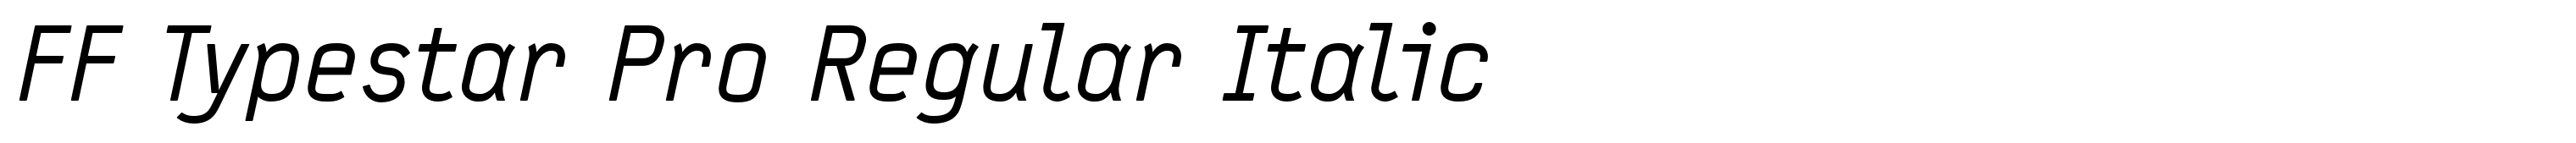 FF Typestar Pro Regular Italic